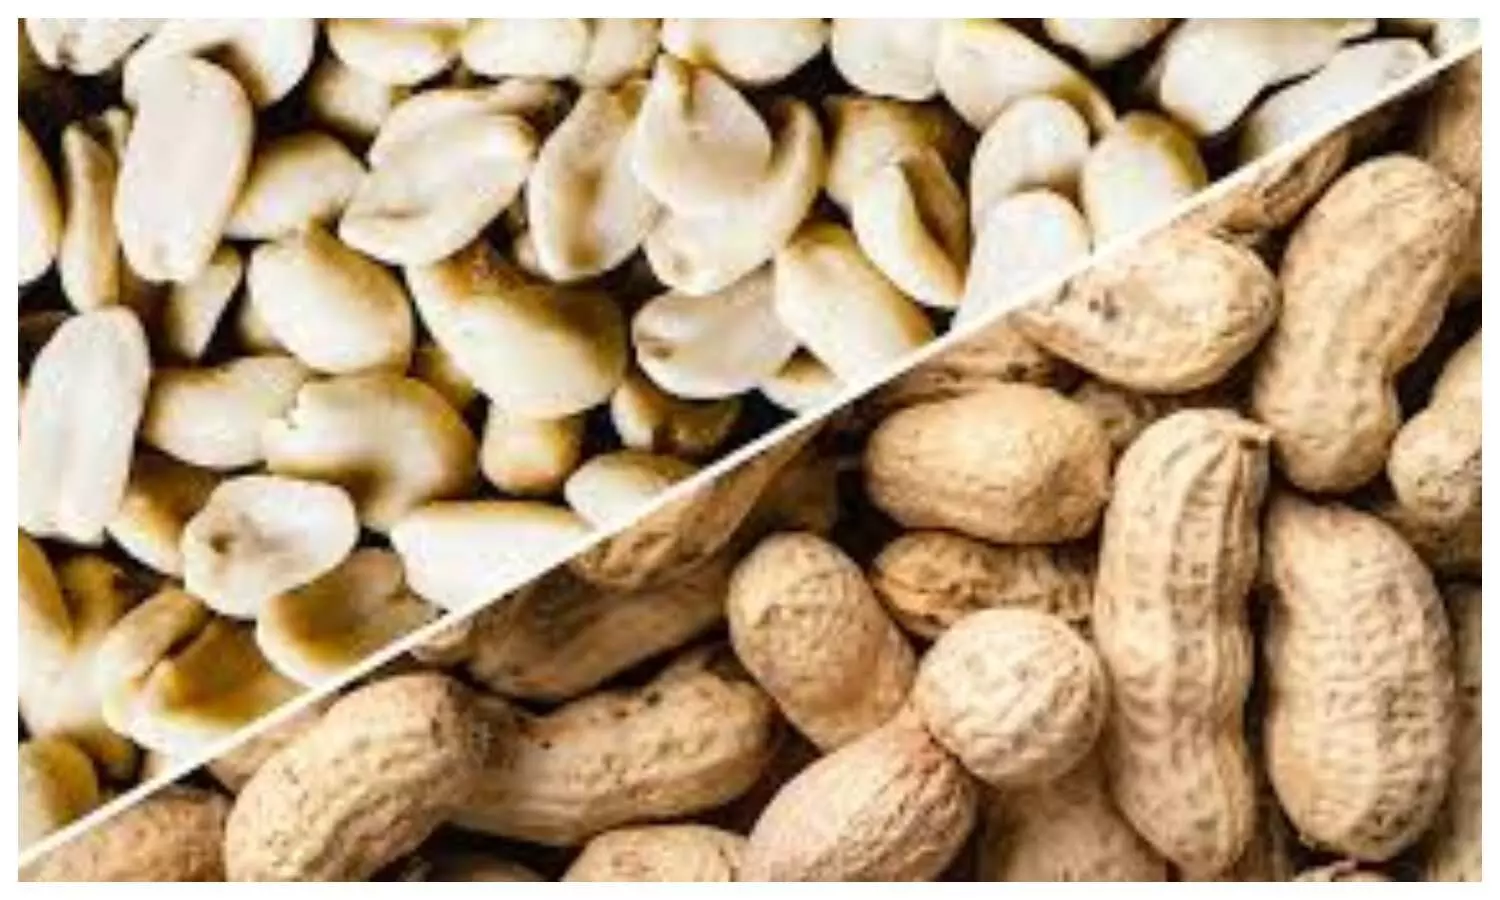 Peanut Benefits